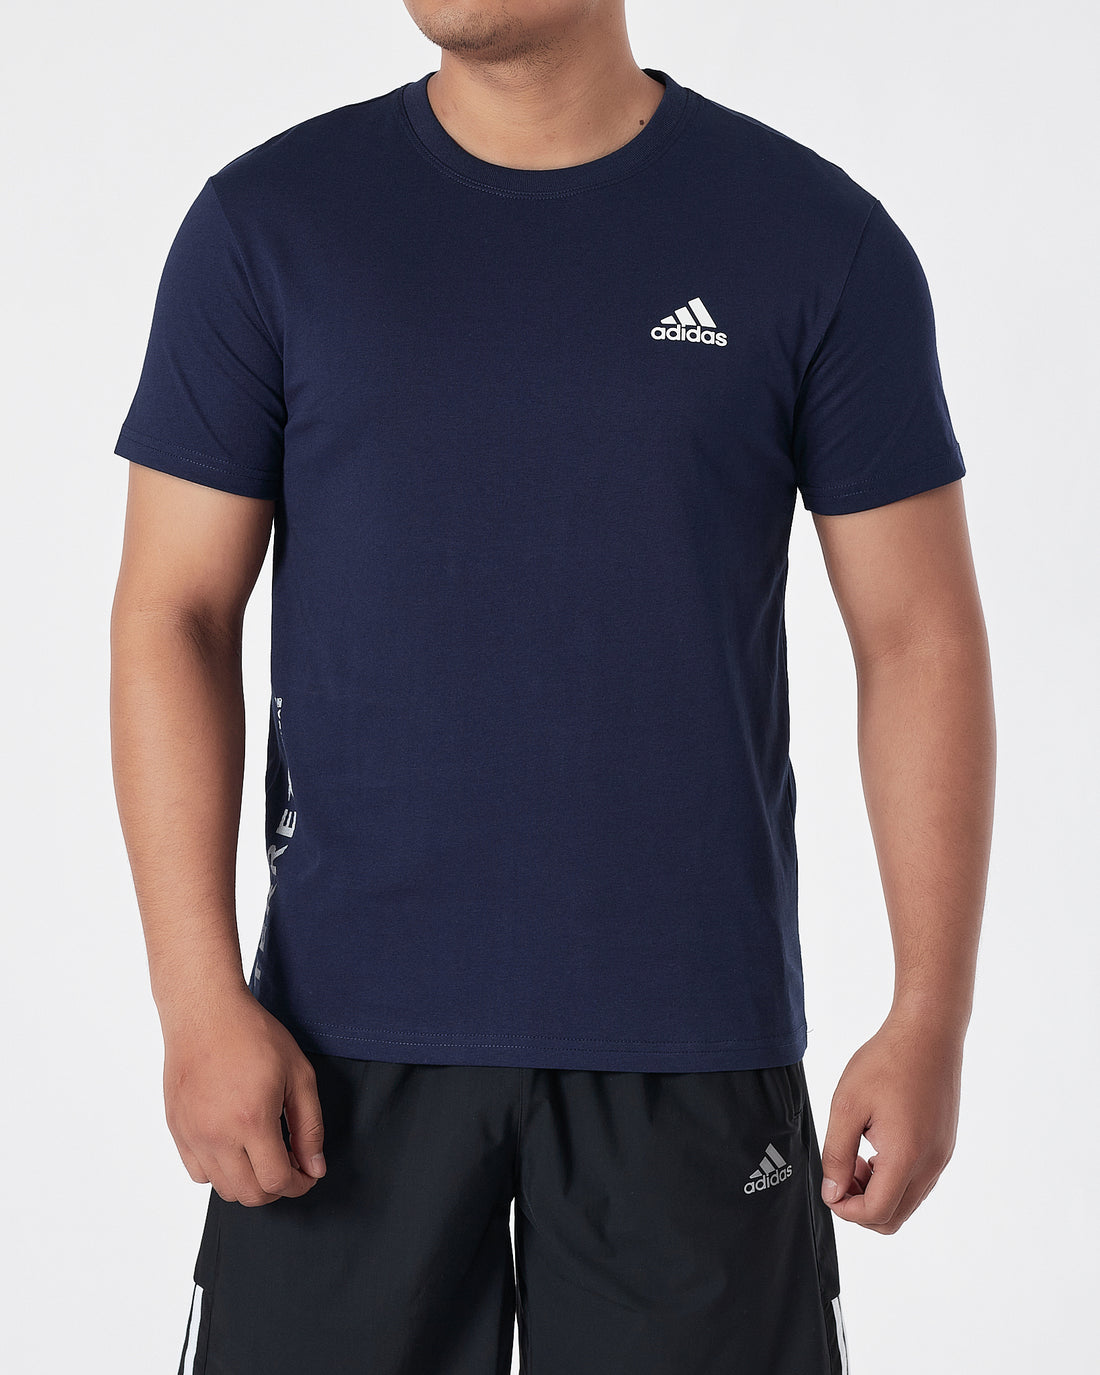 ADI Logo Embroidered Men Blue Sport T-Shirt 14.90